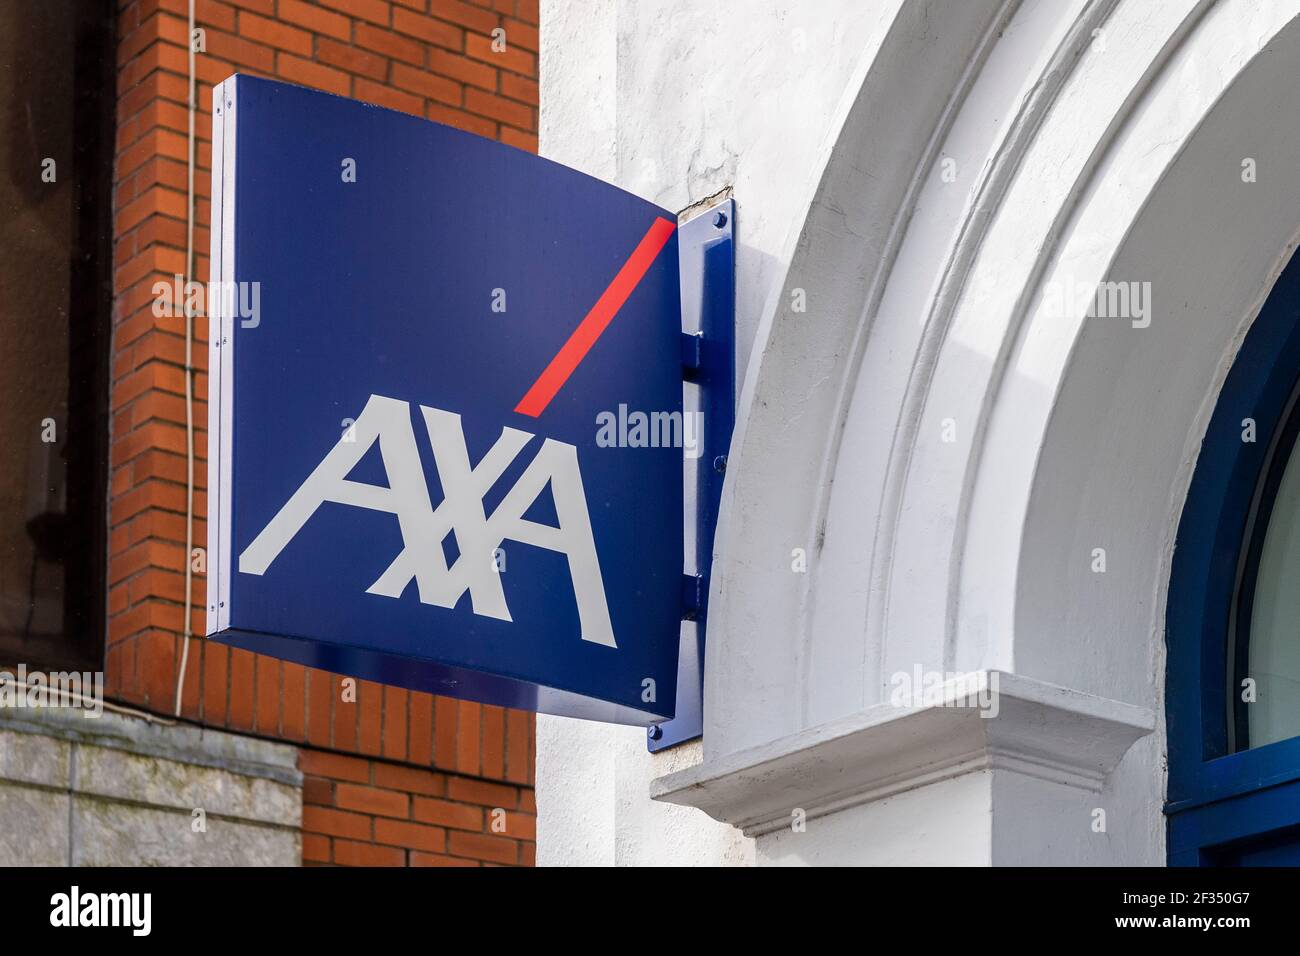 AXA Insurance logo/sign on exterior of building. Stock Photo